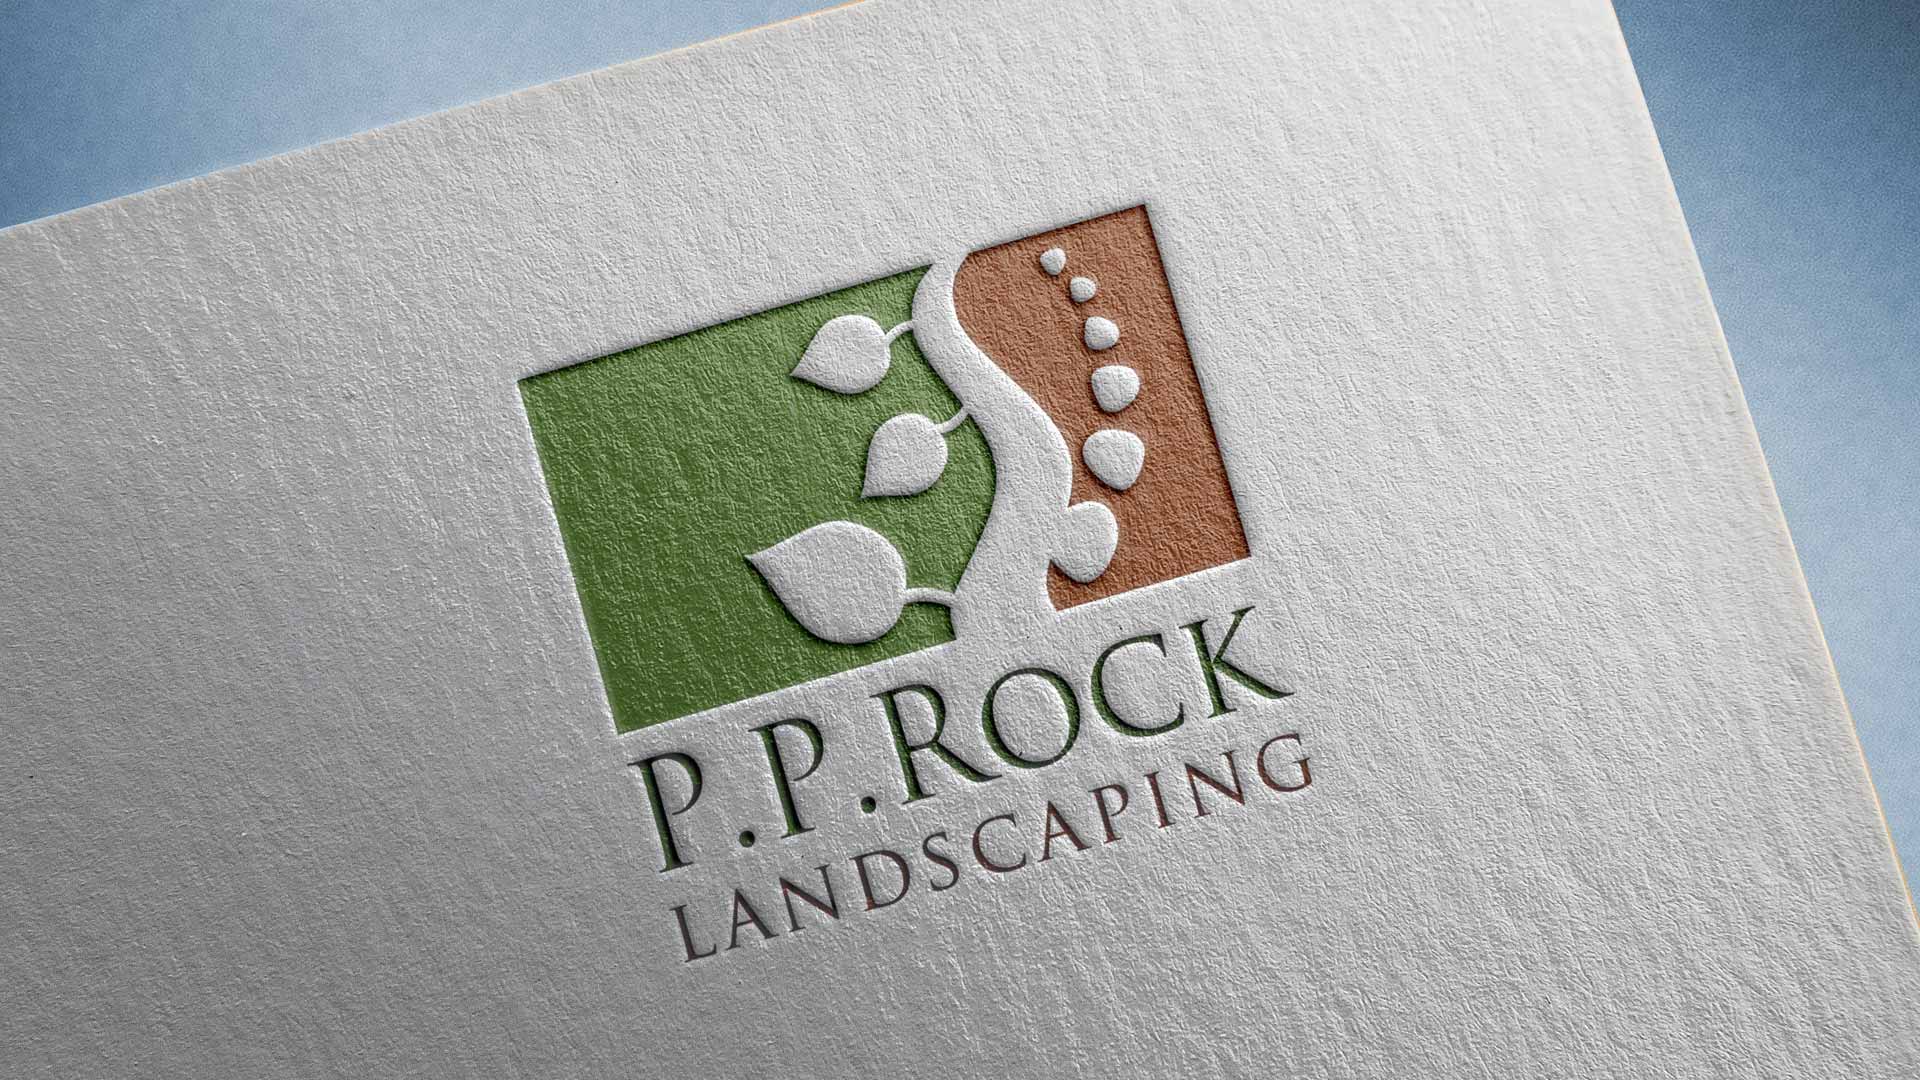 P.P. Rock Landscaping - Logo Design